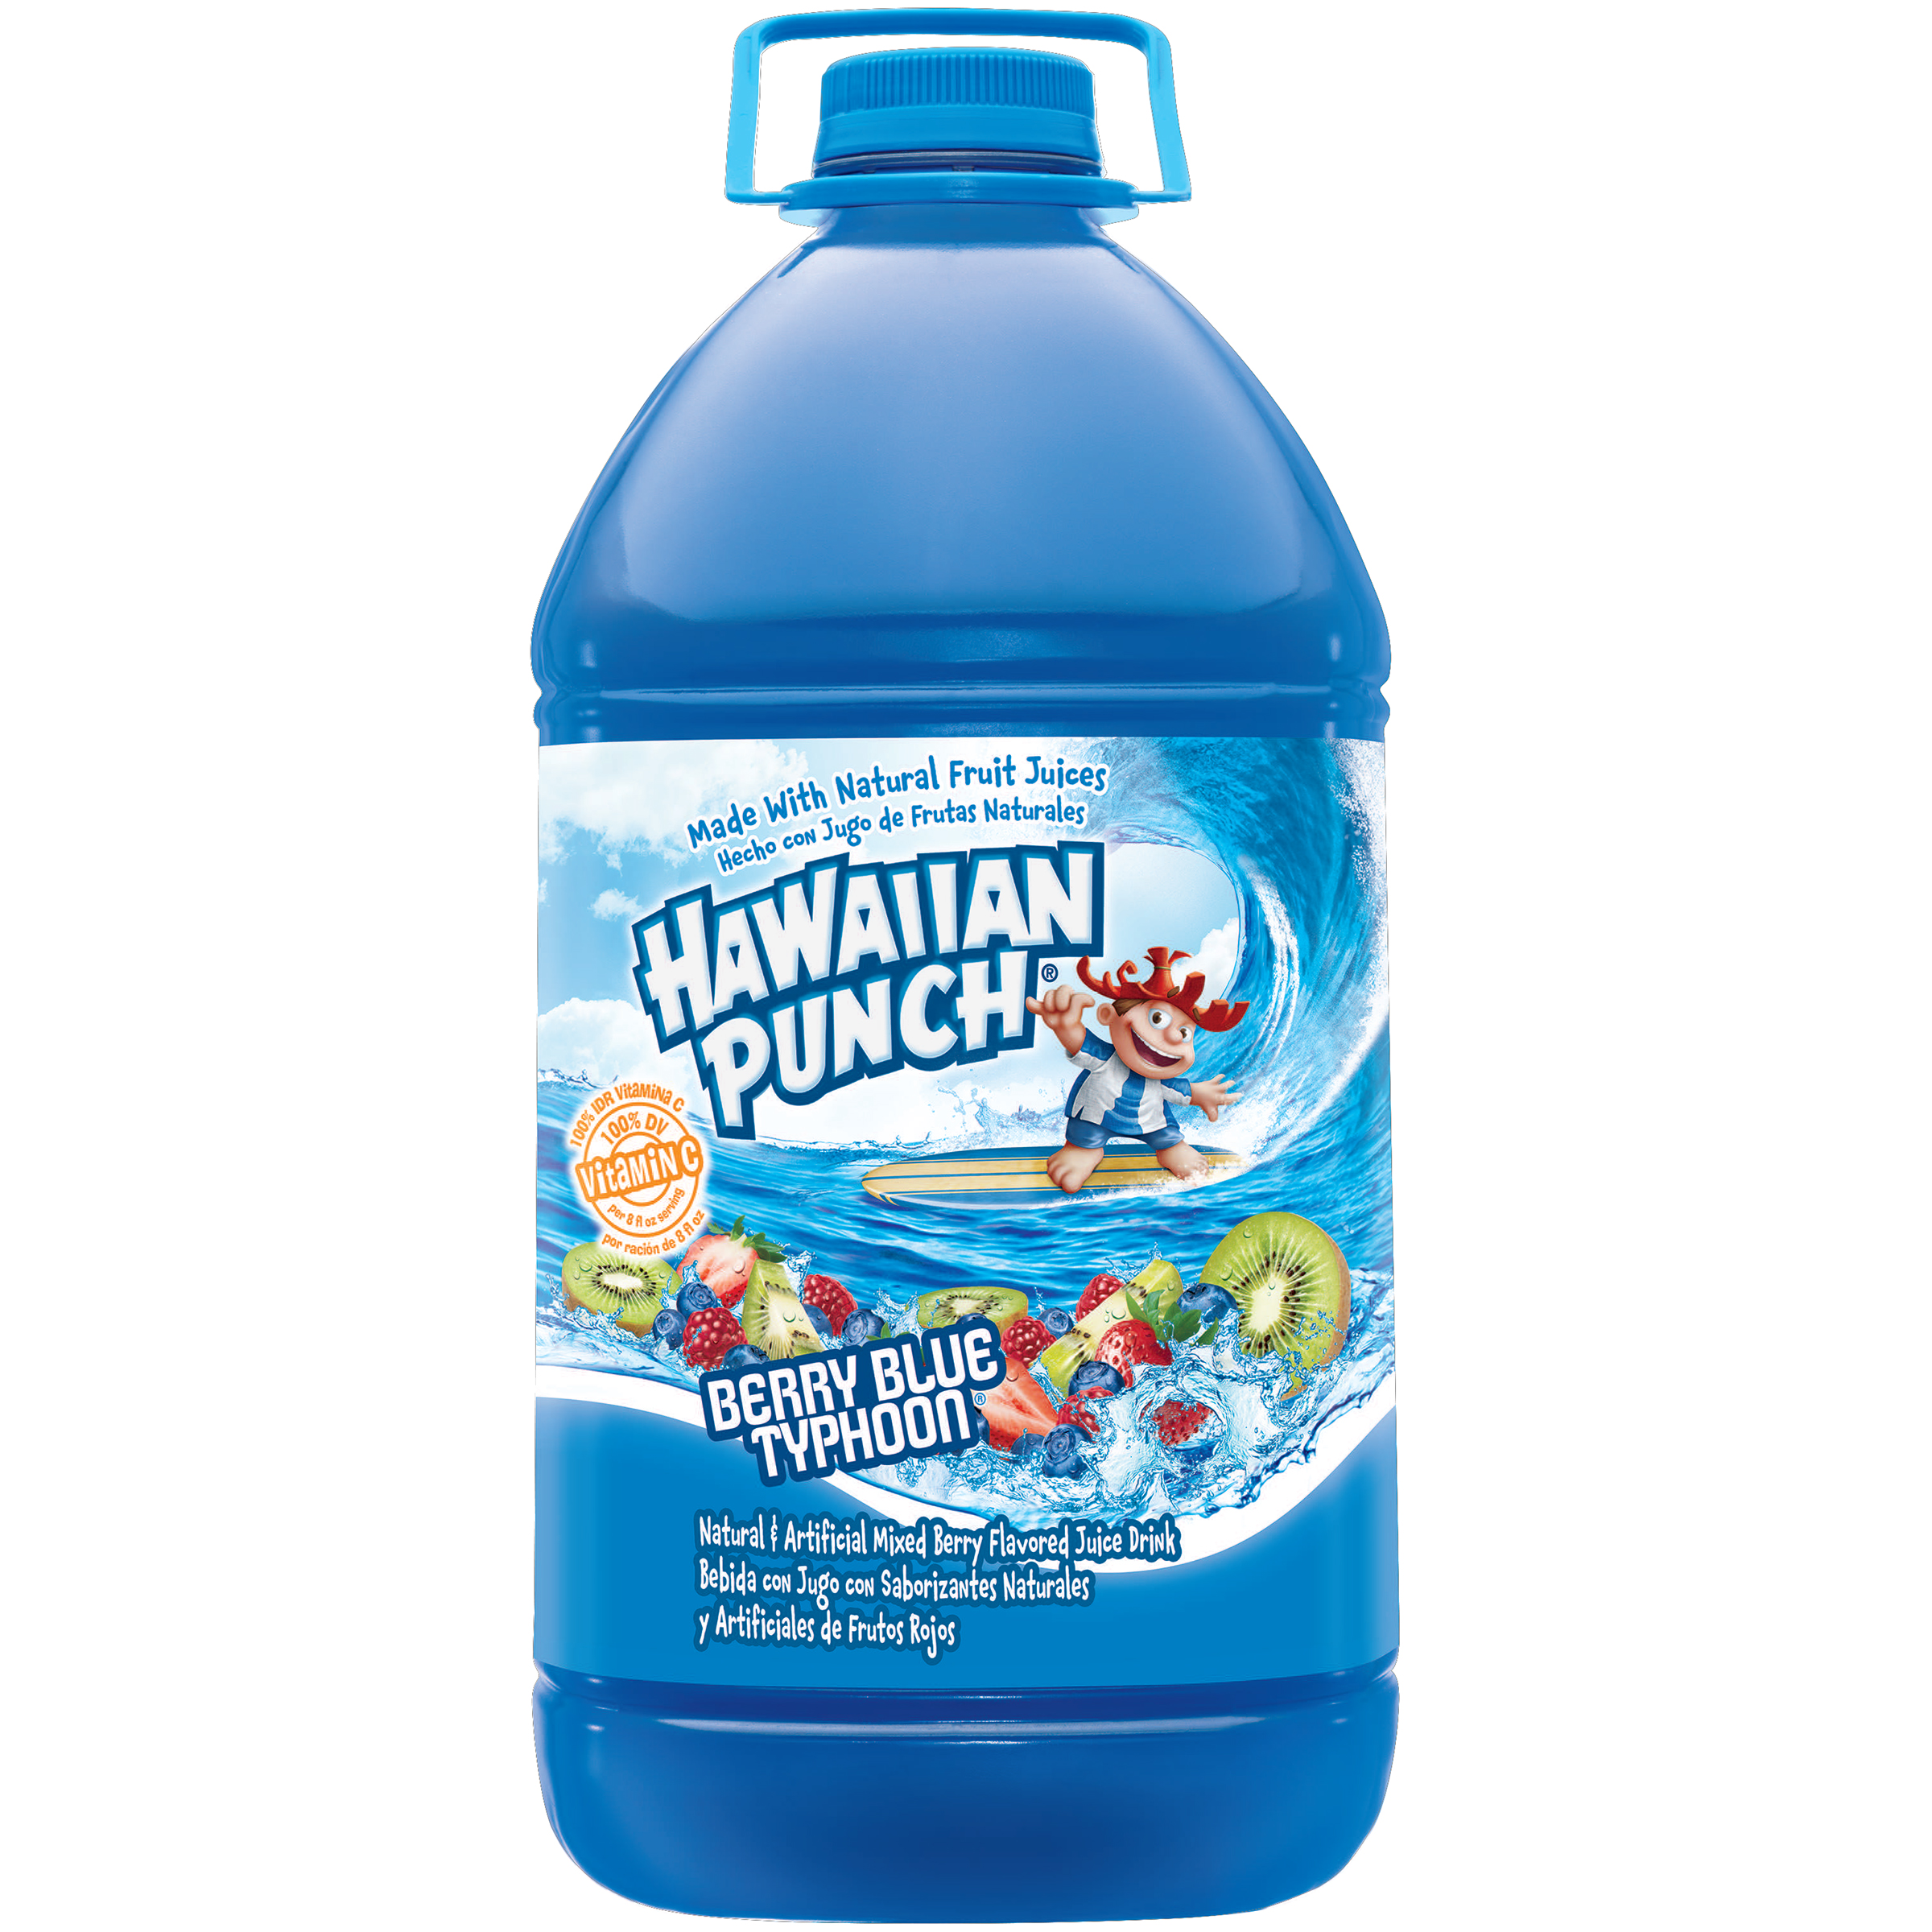 Hawaiian Punch Fruit Punch, Berry Blue Typhoon, 1 gl (3.78 lt)